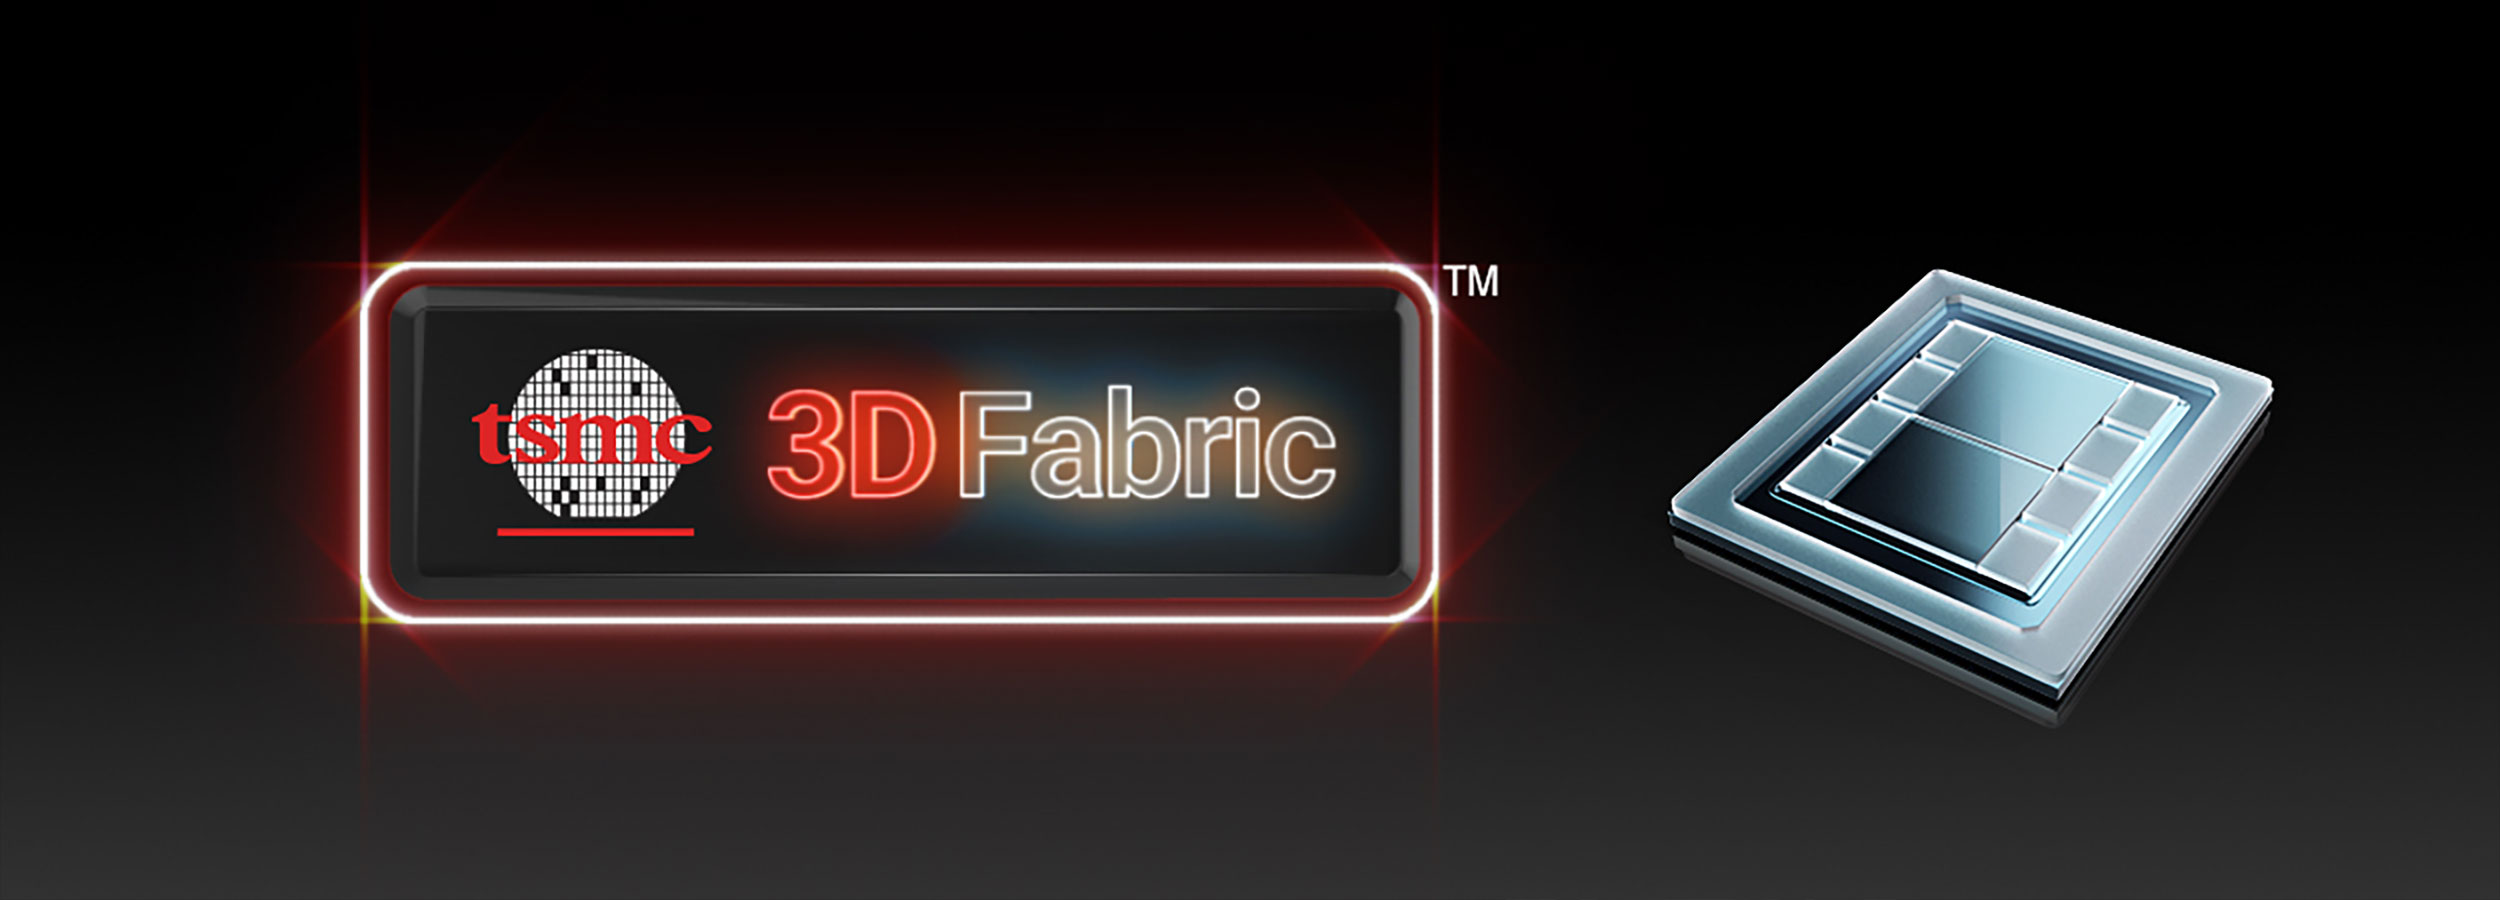 TSMC 3DFabric : 3D硅堆栈及先进的封装技术系列和服务介绍 - 图1